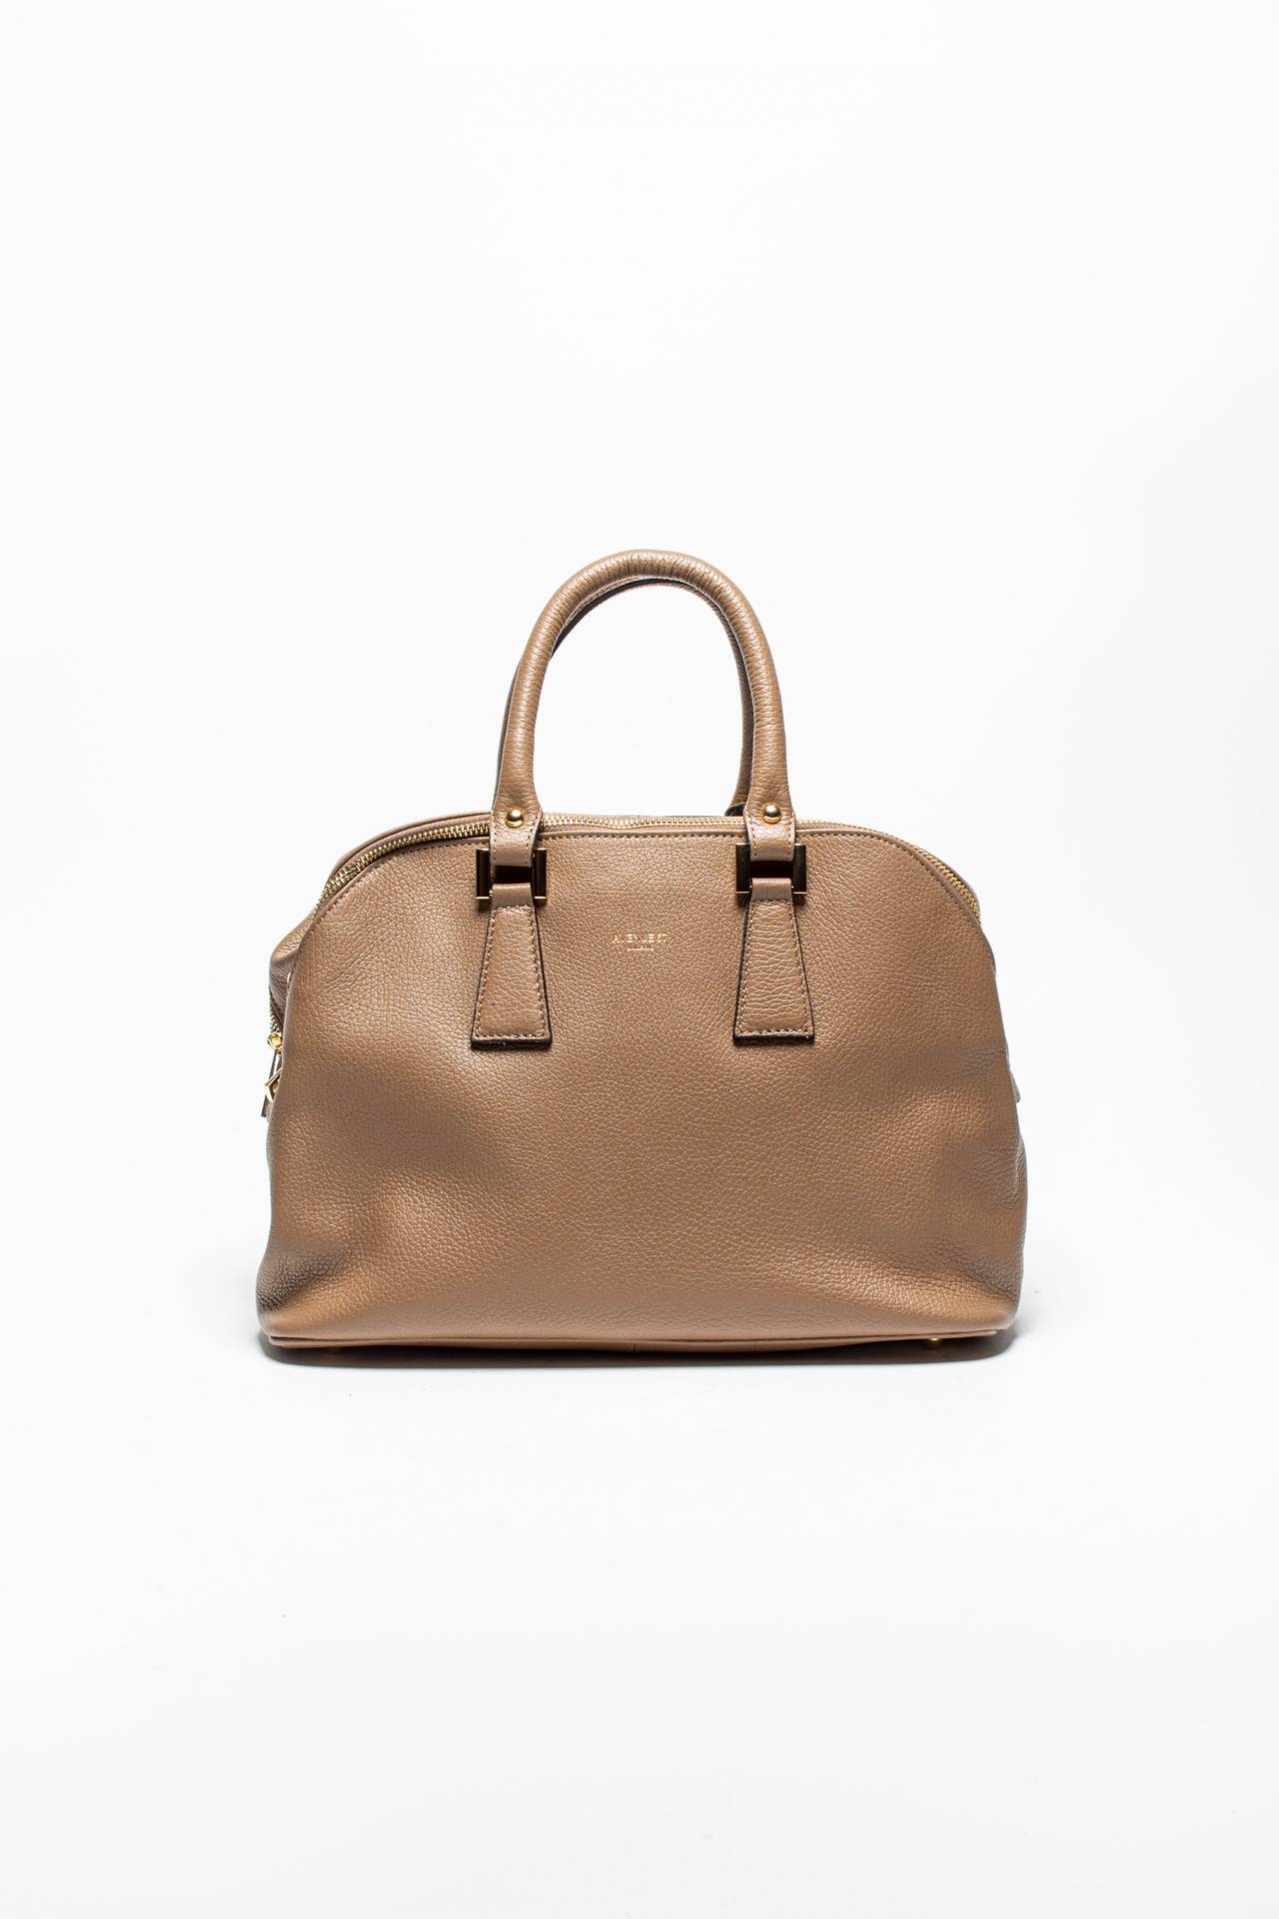 FANDANGO bag in leather